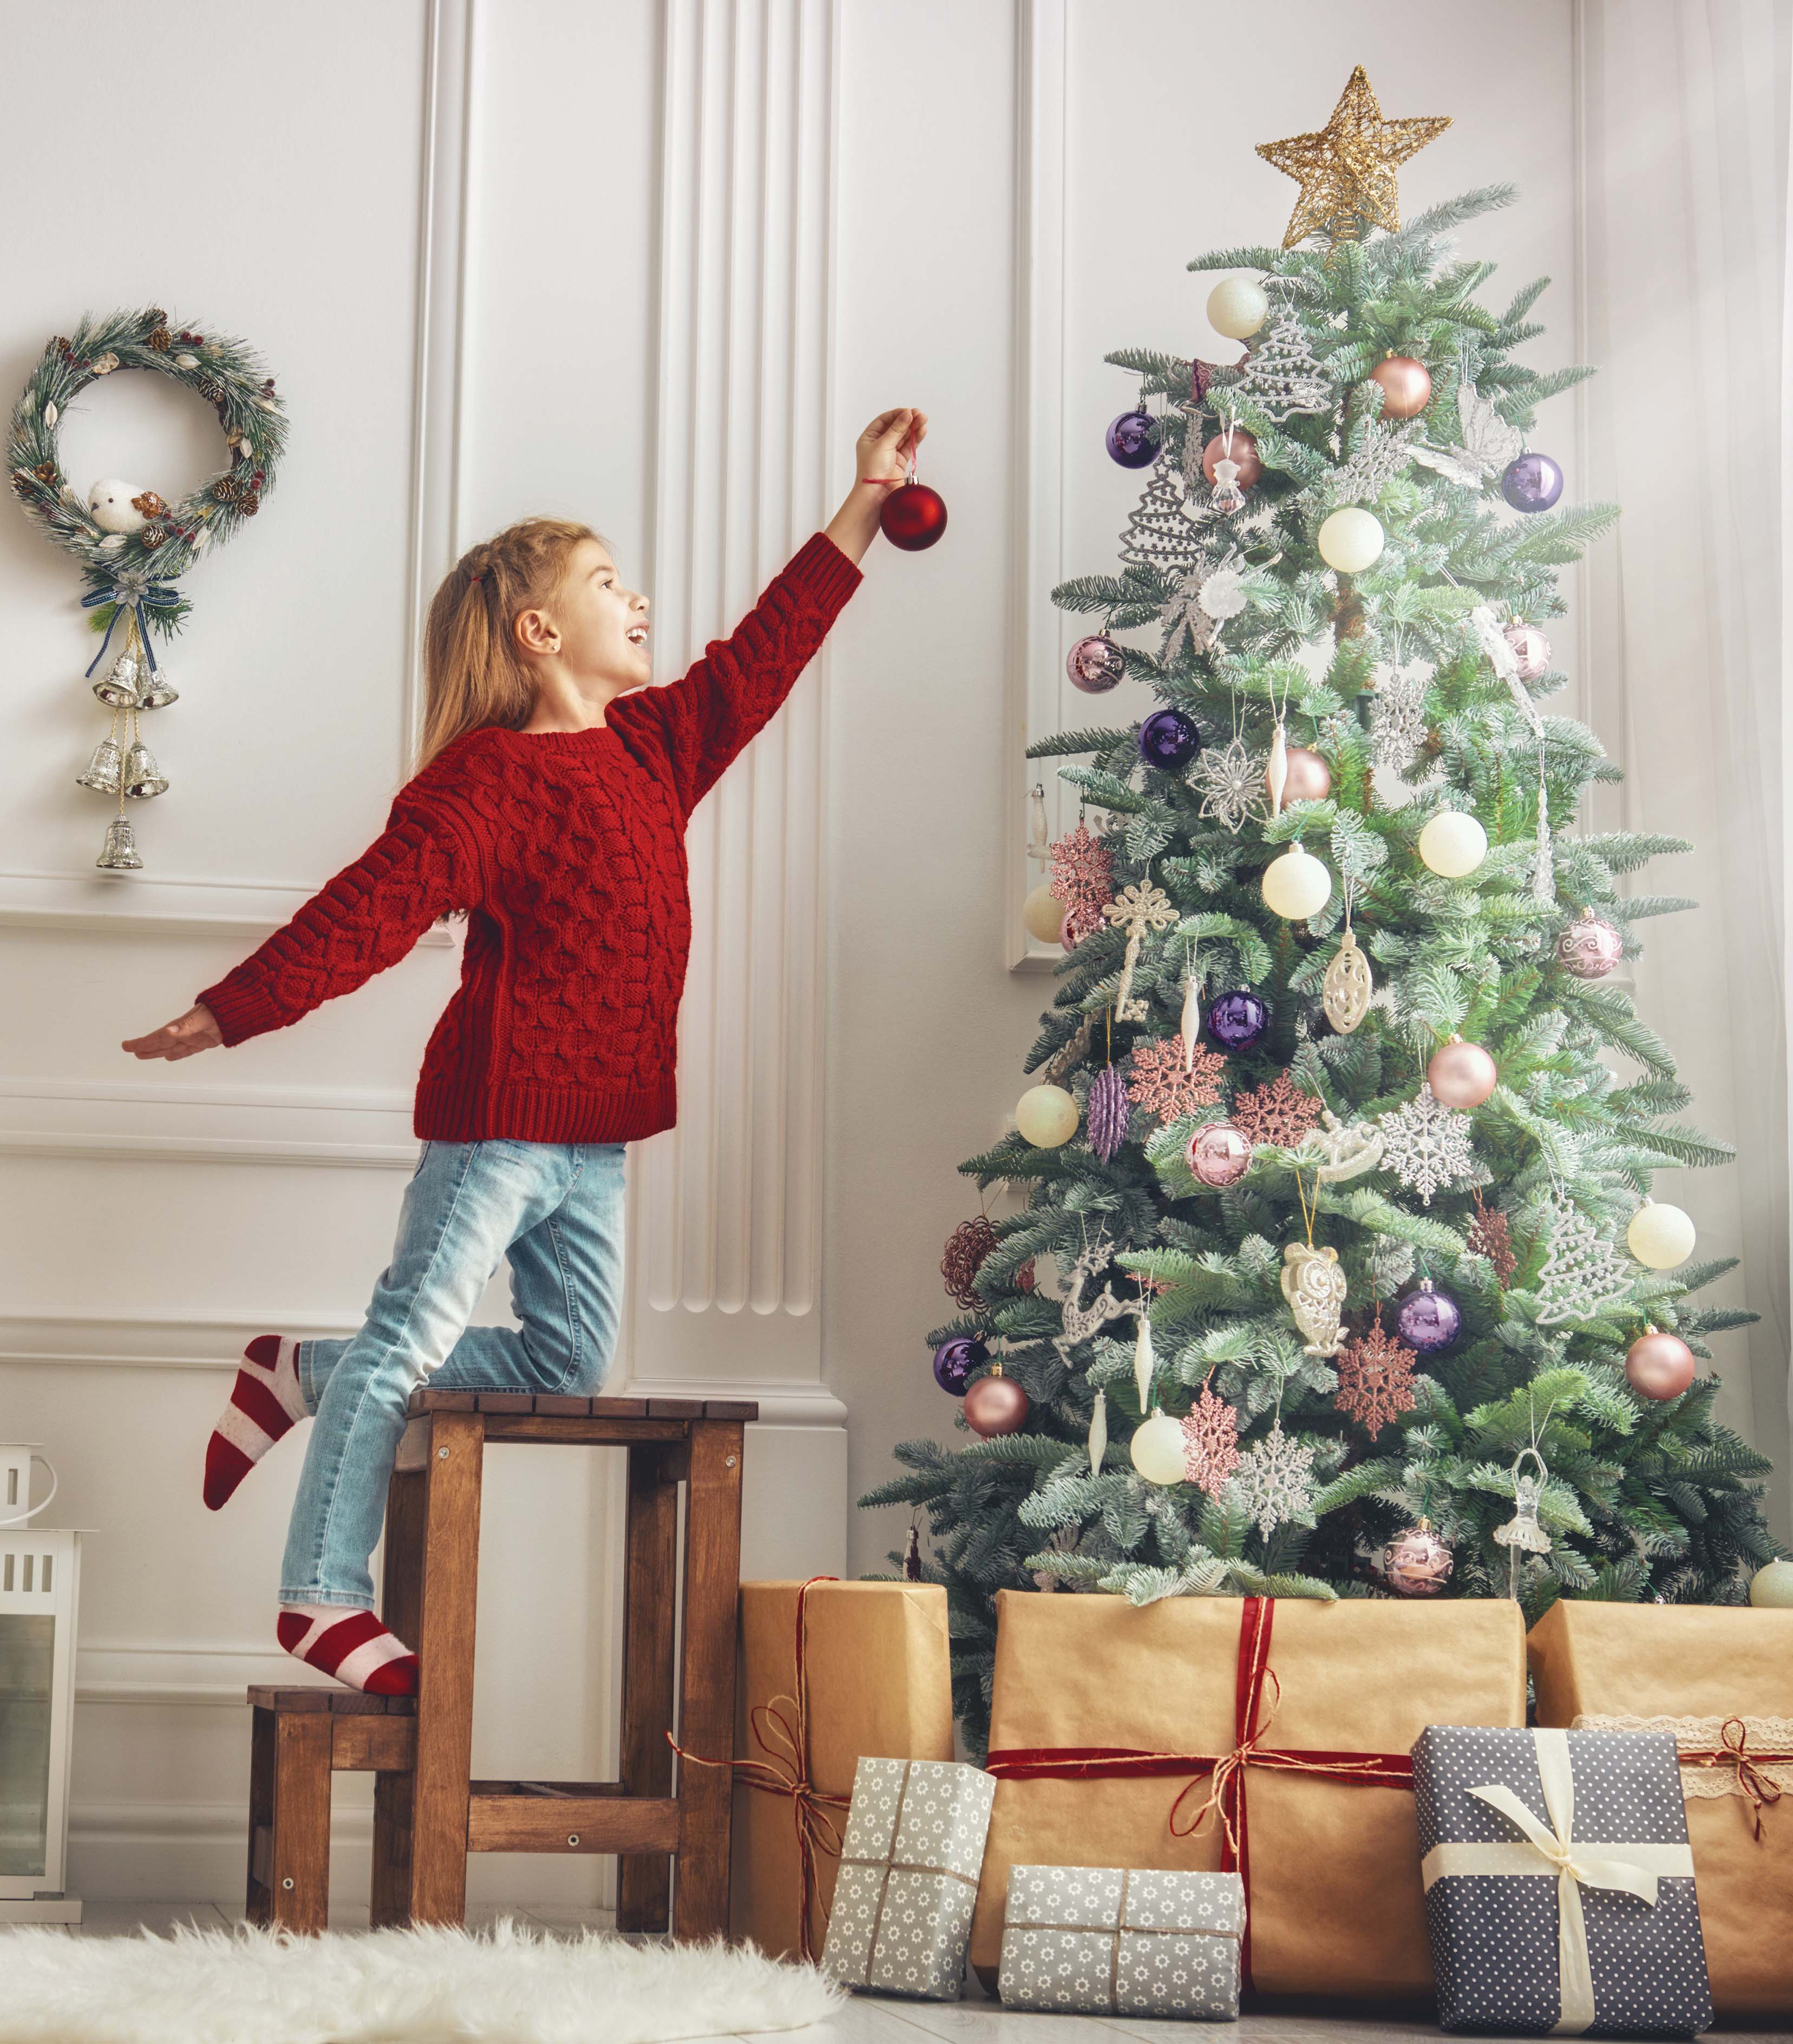 Girl placing Christmas ornament on a tree